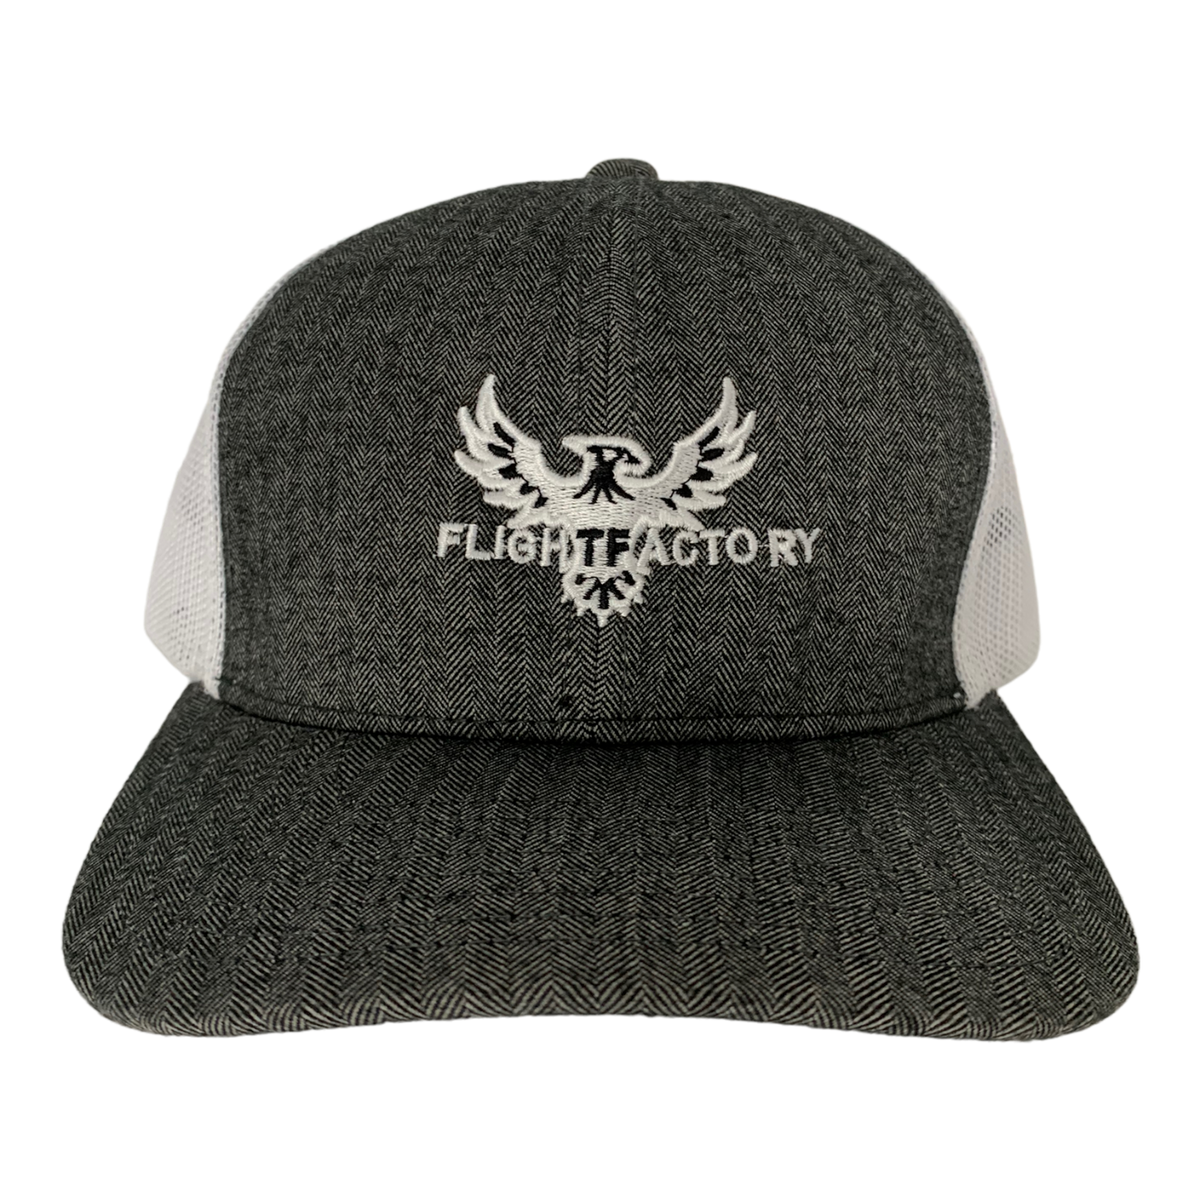 Flight Factory Herringbone Trucker Hats